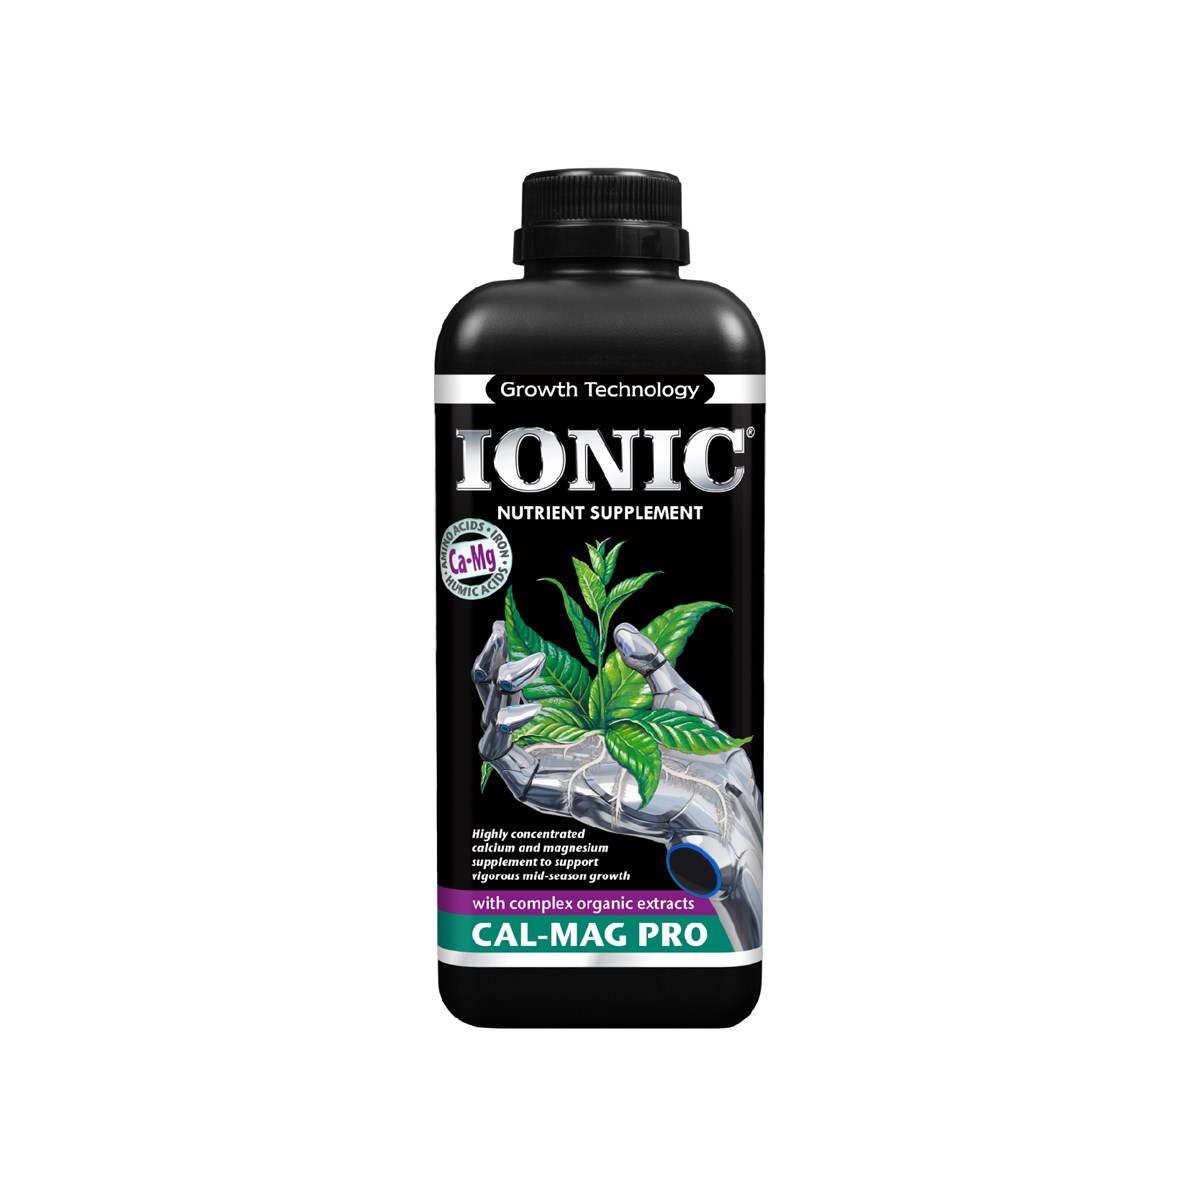 IONIC Cal-Mag Pro